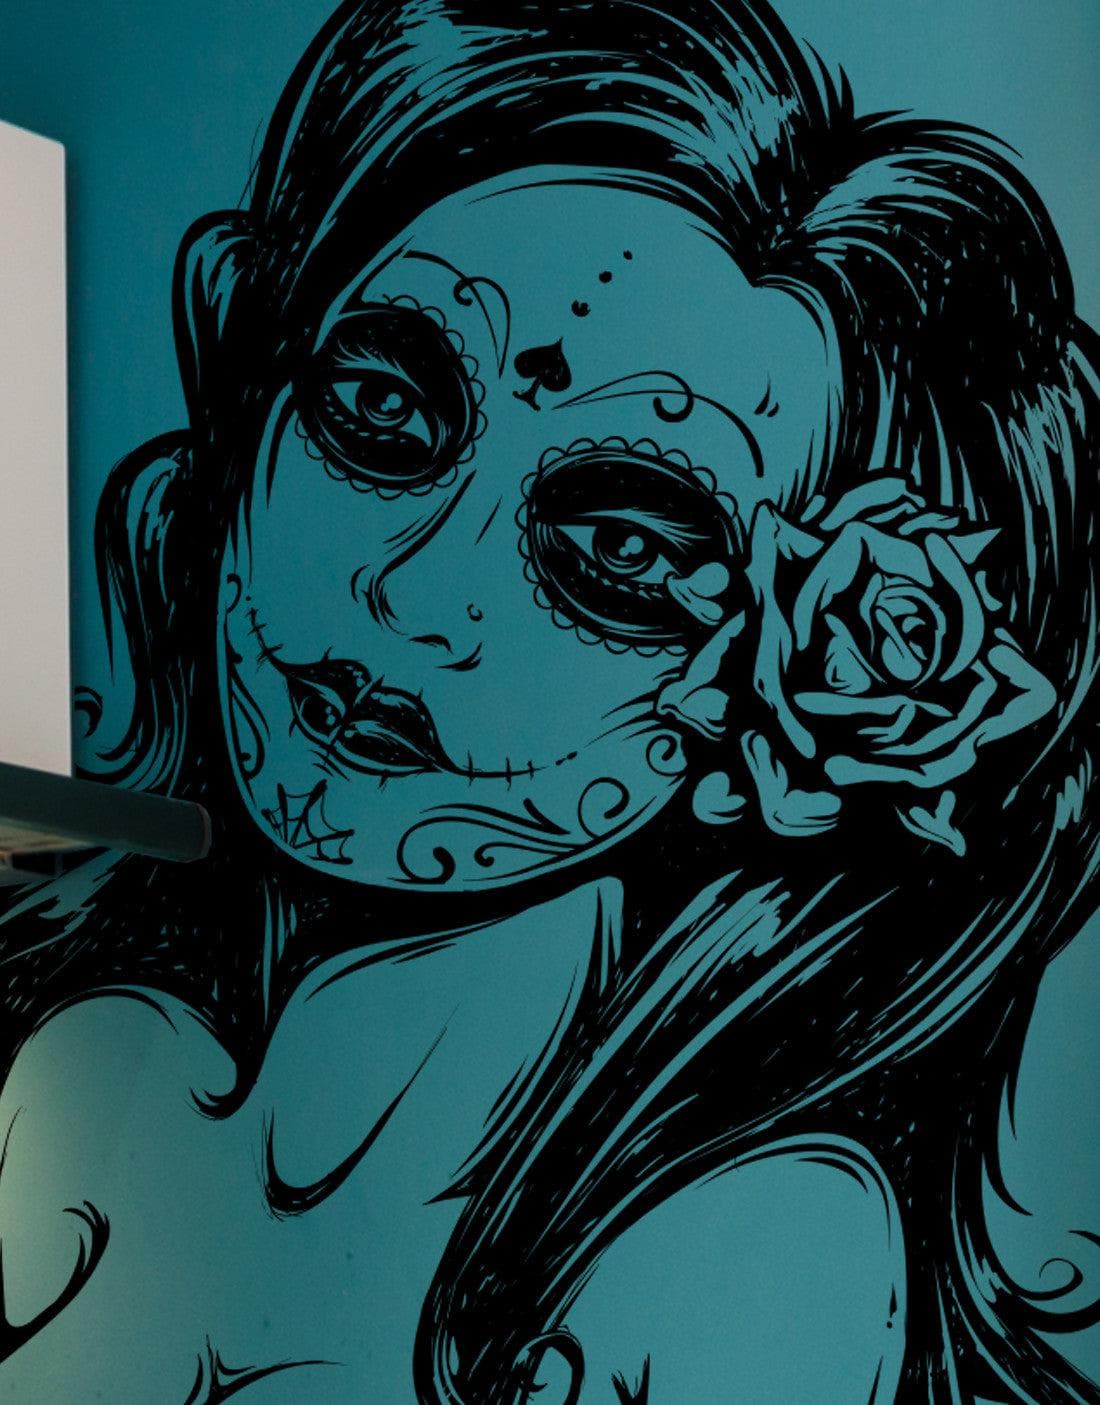 Mexican Day of the Dead Sexy Girl Vinyl Wall Decal Sticker (Dia De Los Muertos)#6021